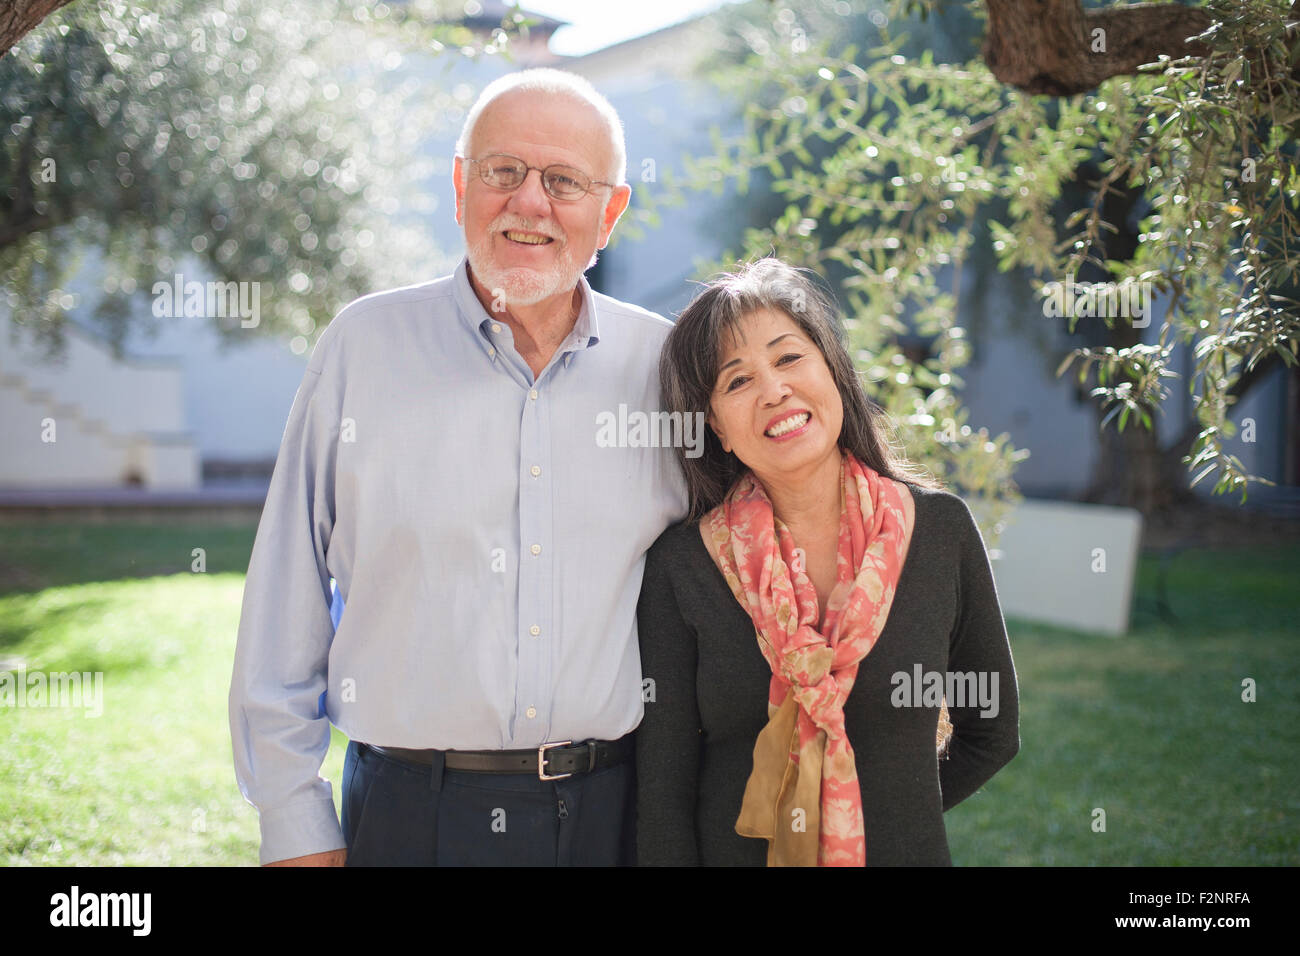 Older couple smiling in backyard Banque D'Images